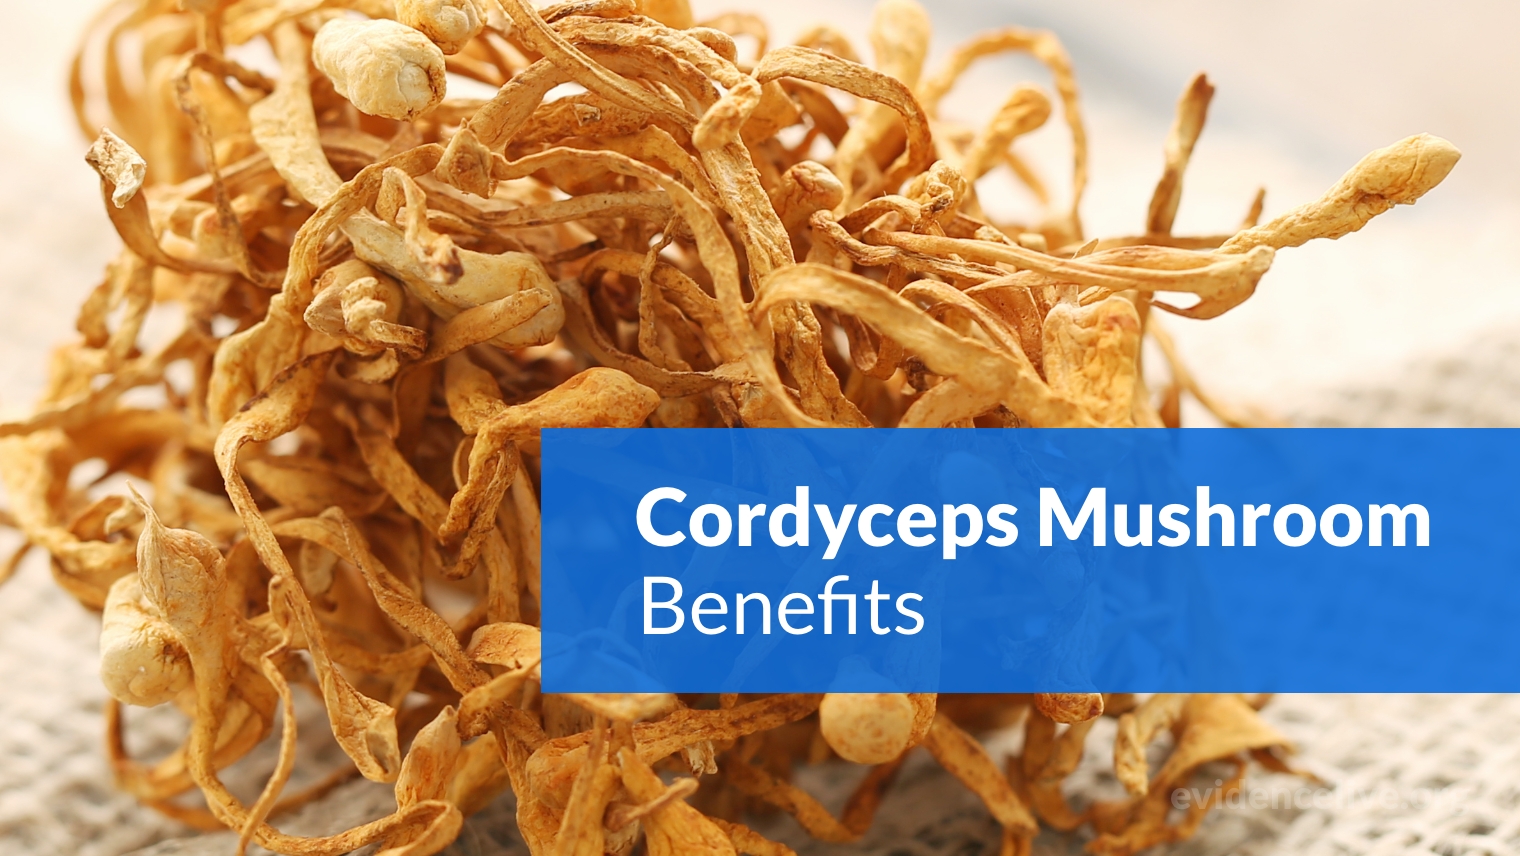 Cordyceps Mushroom: Benefits, Uses, Dosage, and Side Effects